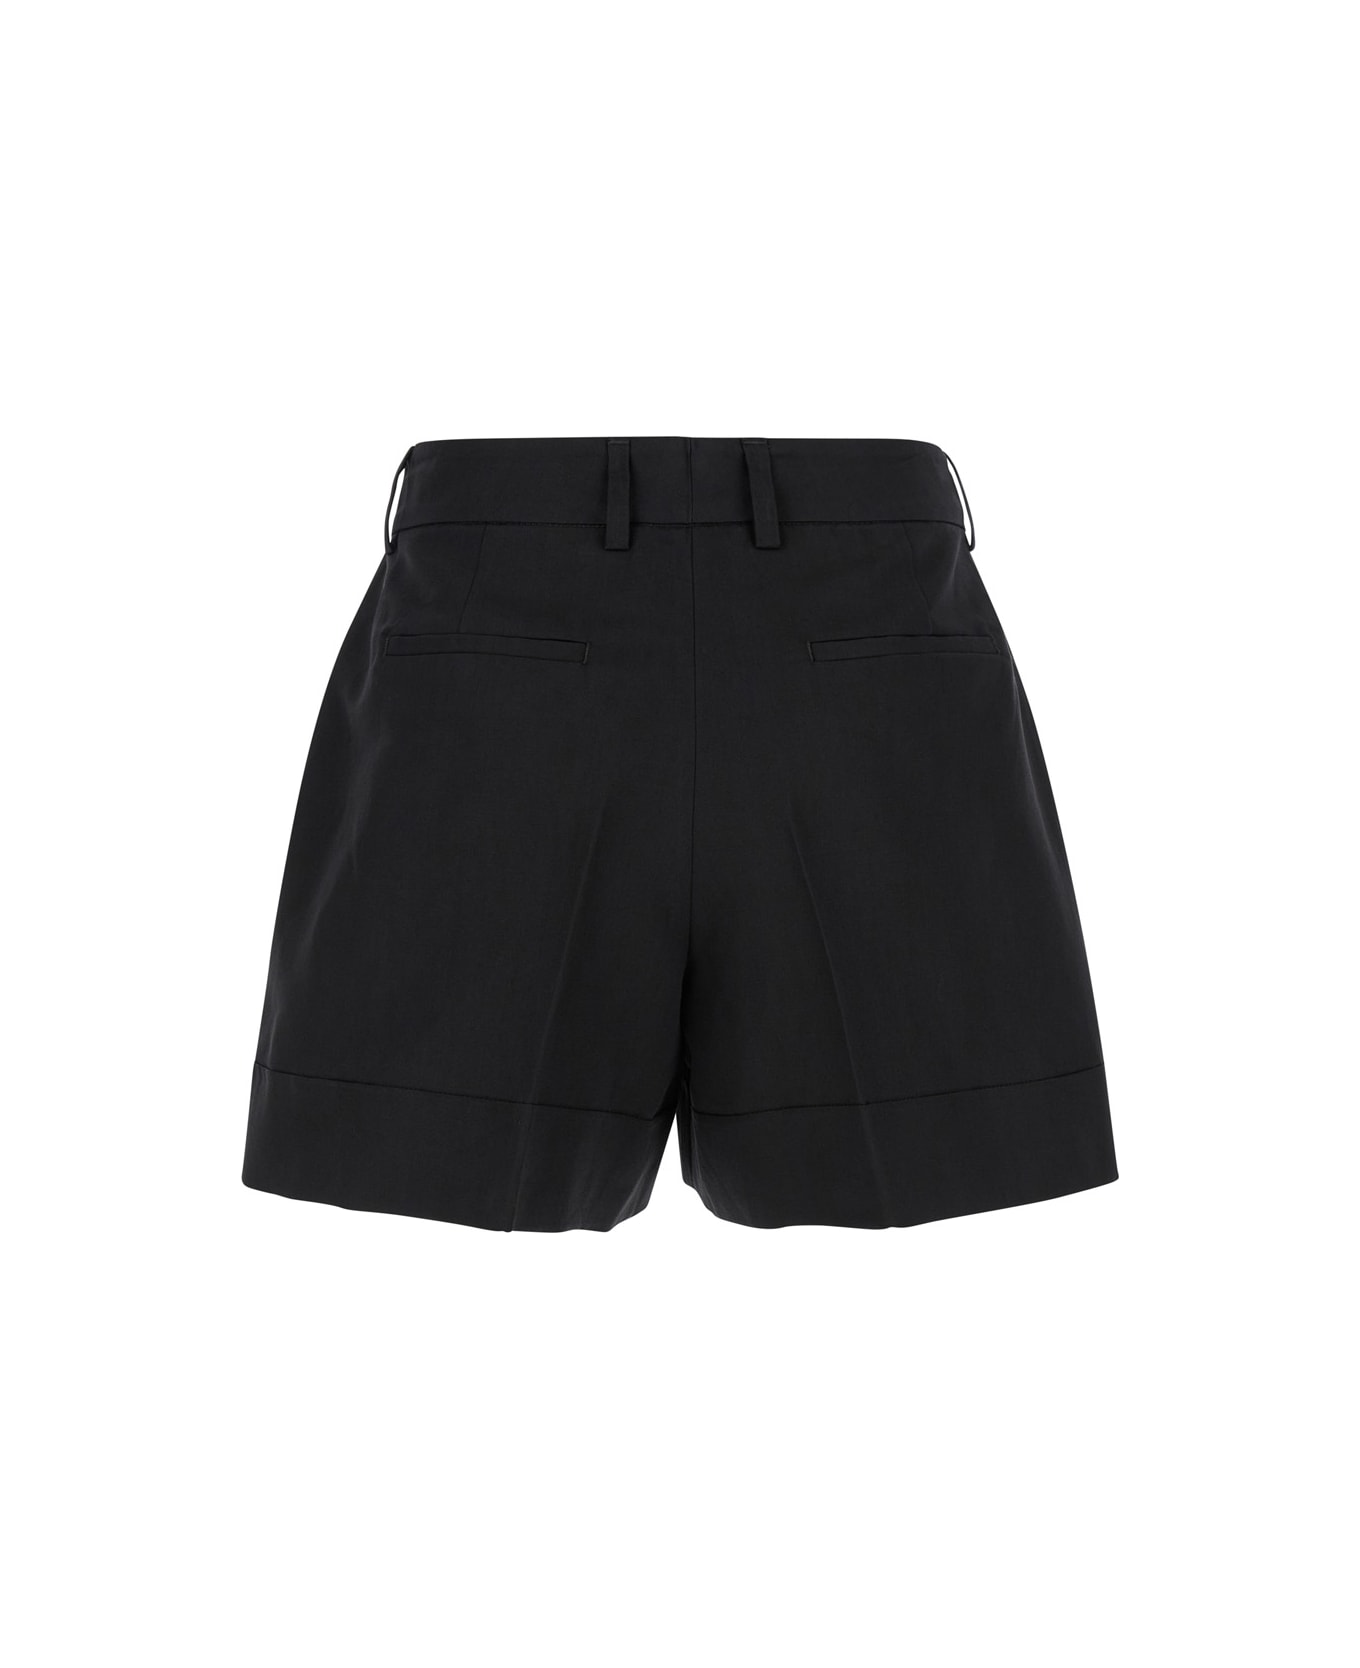 PT Torino Black High Waisted 'delia' Shorts In Cotton & Linen Blend Woman - Black ショートパンツ